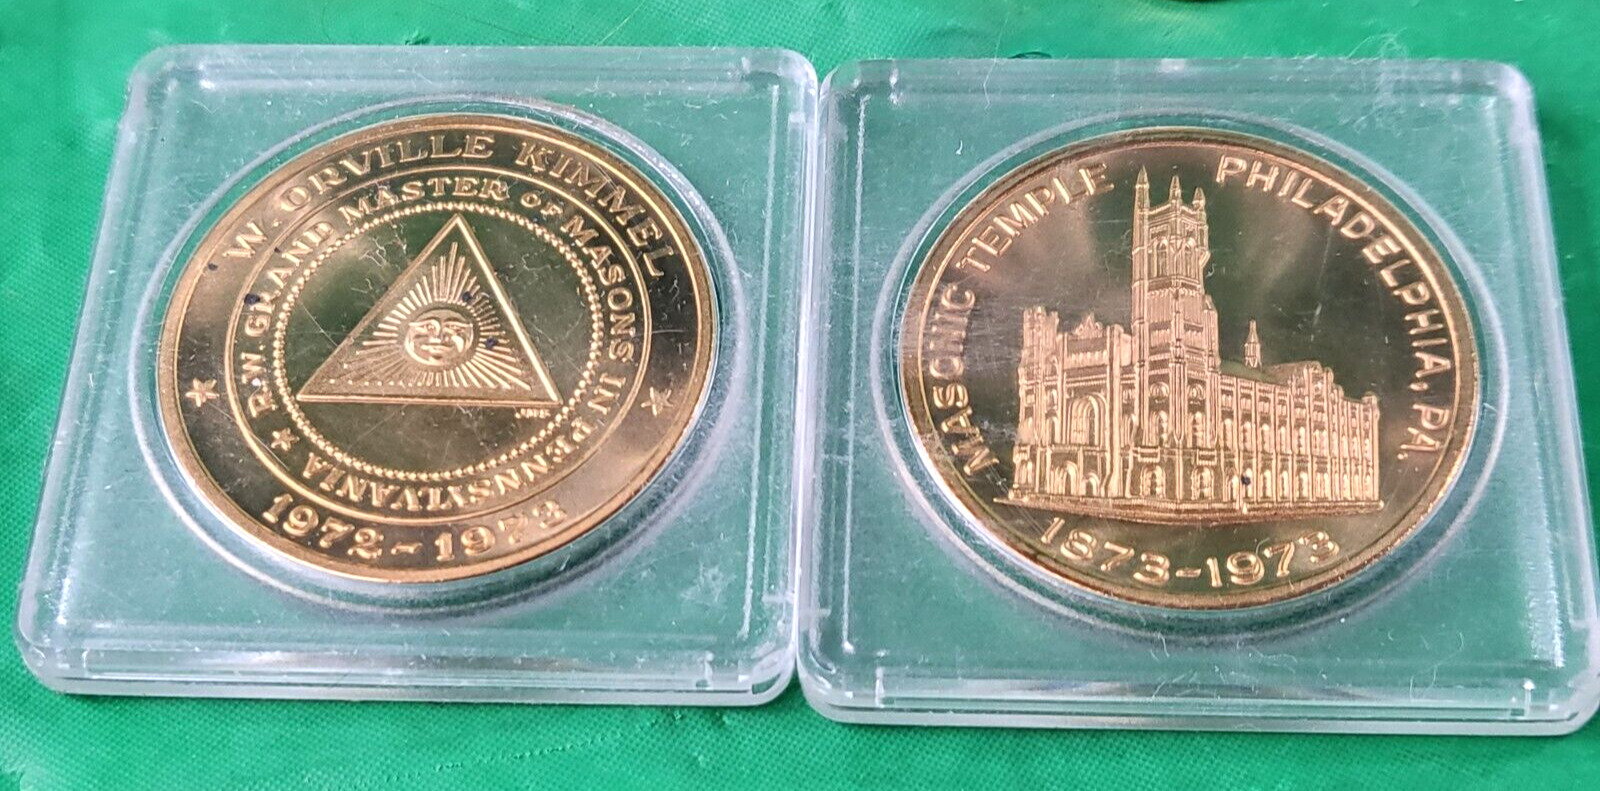 Masonic Temple Philadelphia PA 1873-1973 Coin Medal W. Orville Kimmel Freemason 